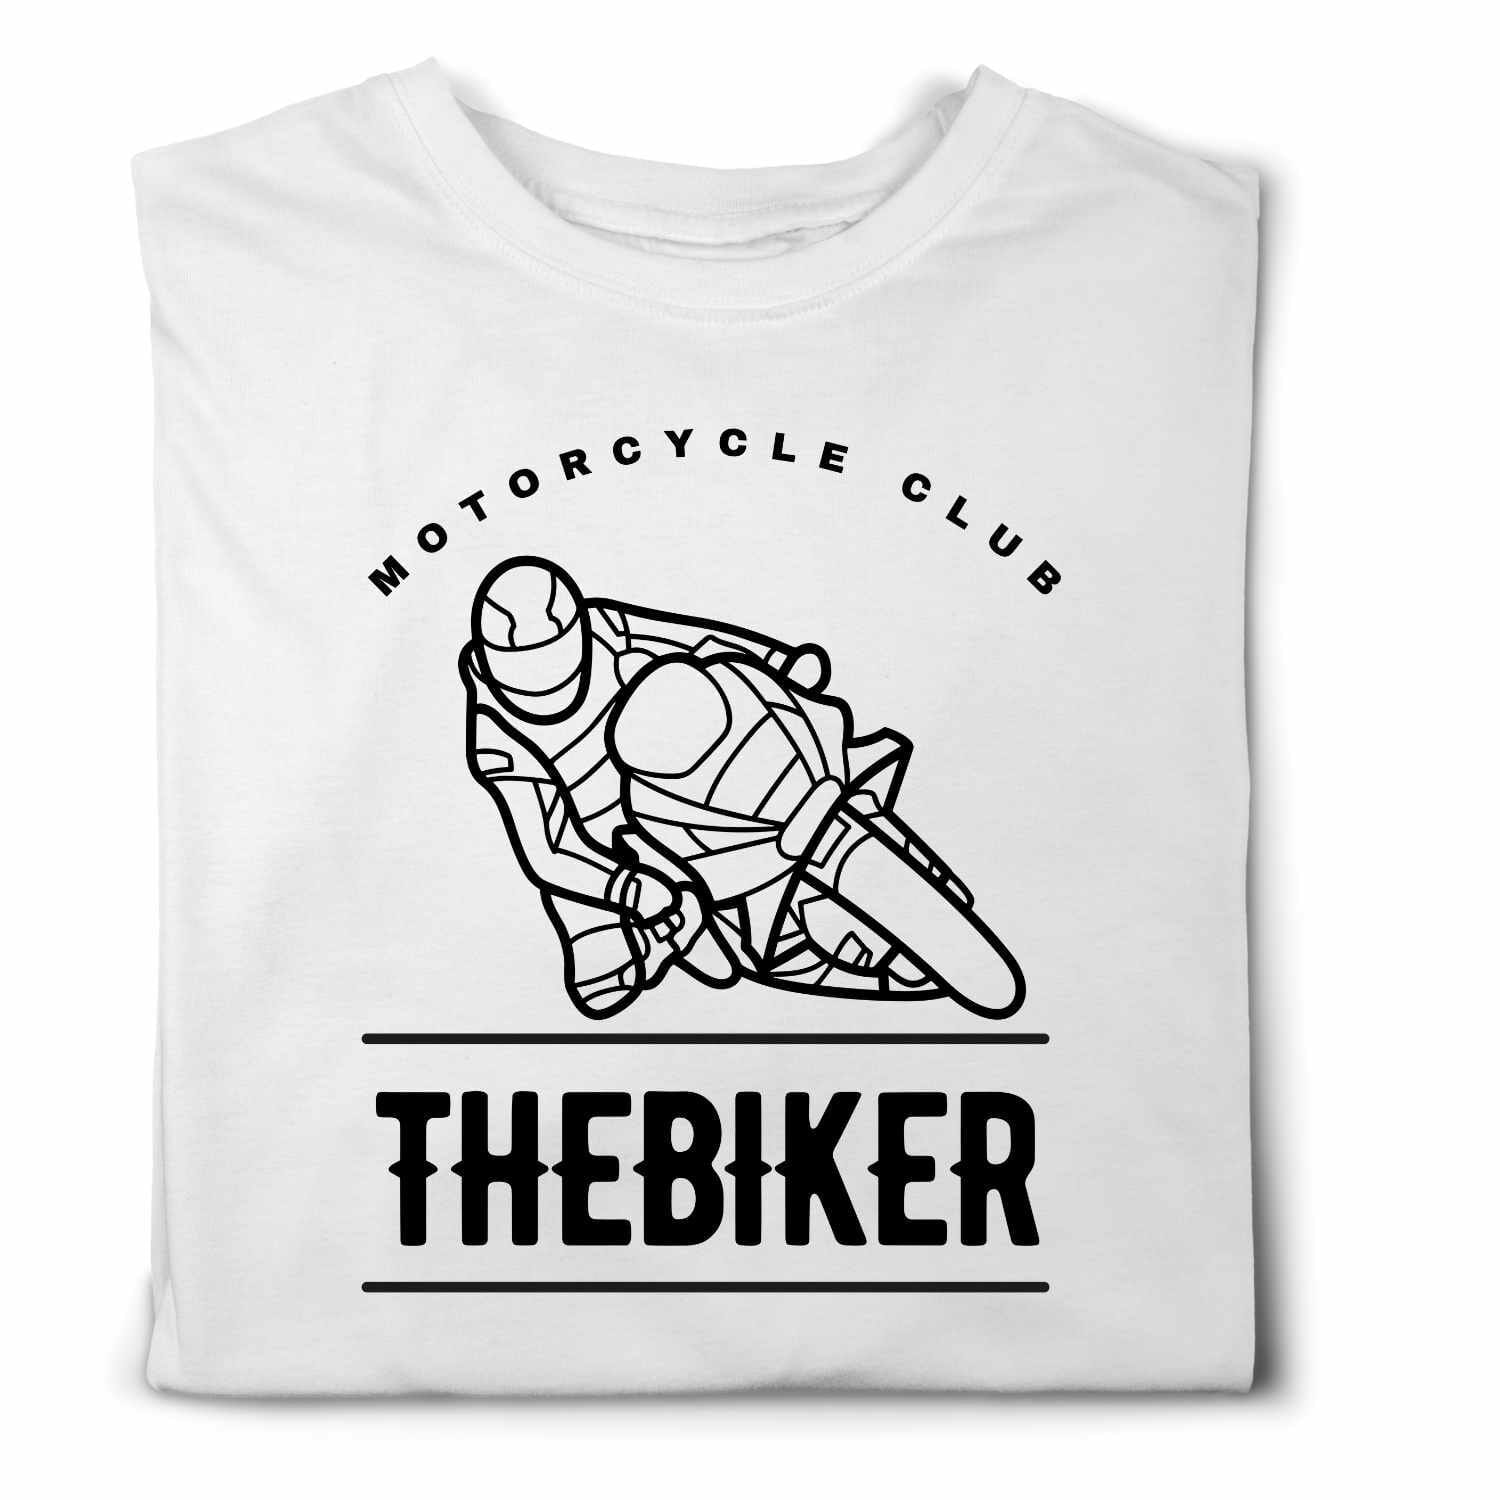 MotorCycle Club The Biker T-shirt Design